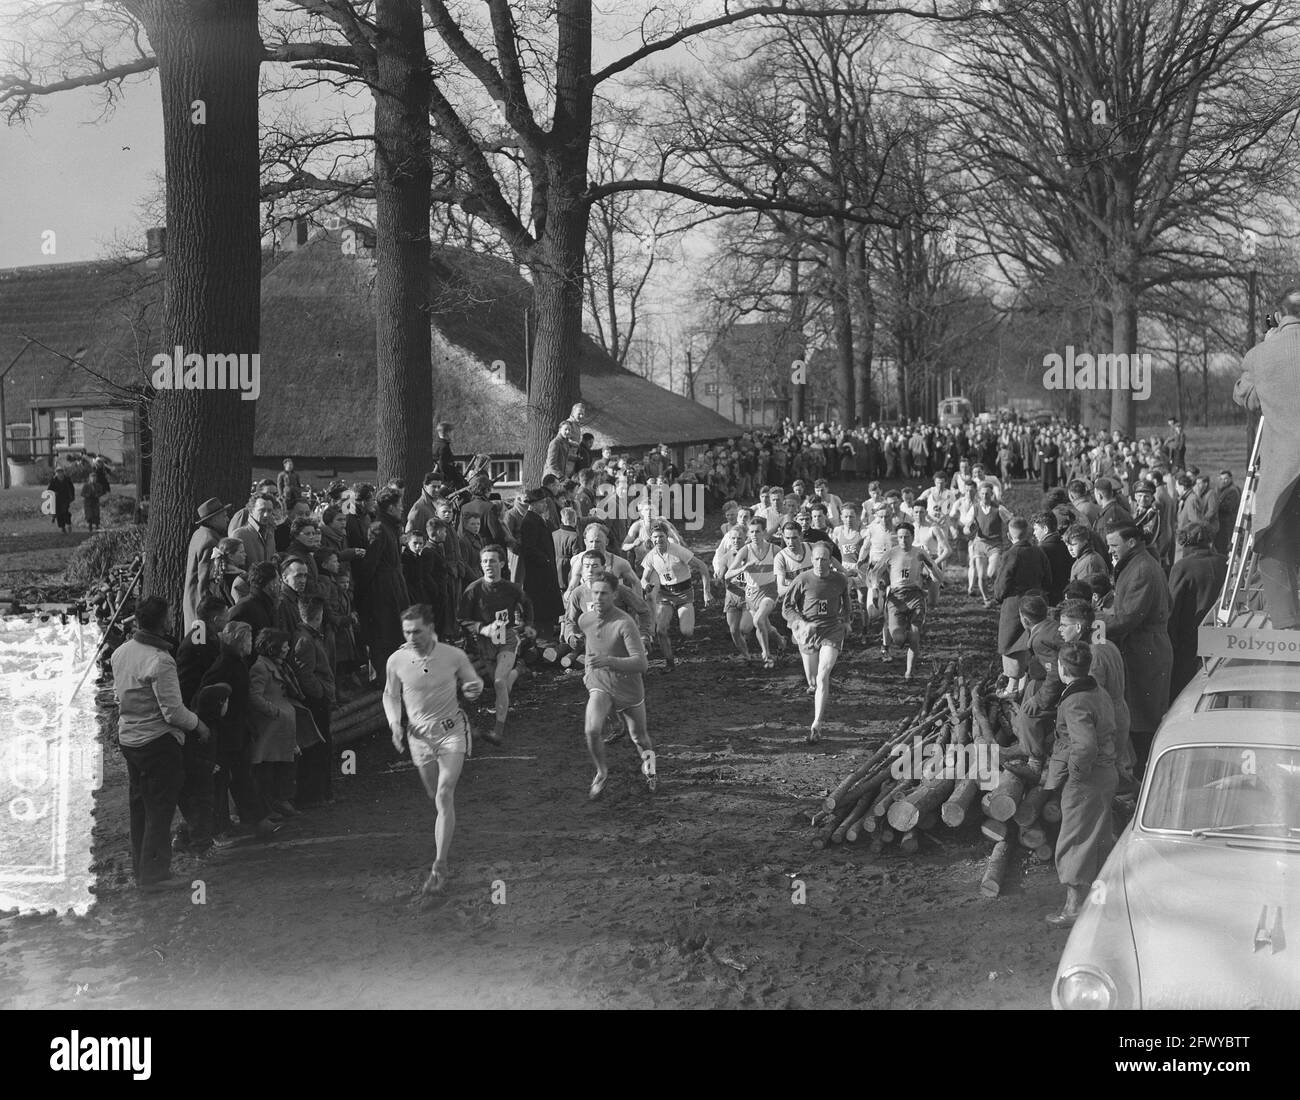 Athletics field run Breda, second J. Adriaansen, 6 March 1955, ATLETICS, Cross Country Championships, The Netherlands, 20th century press agency photo Stock Photo